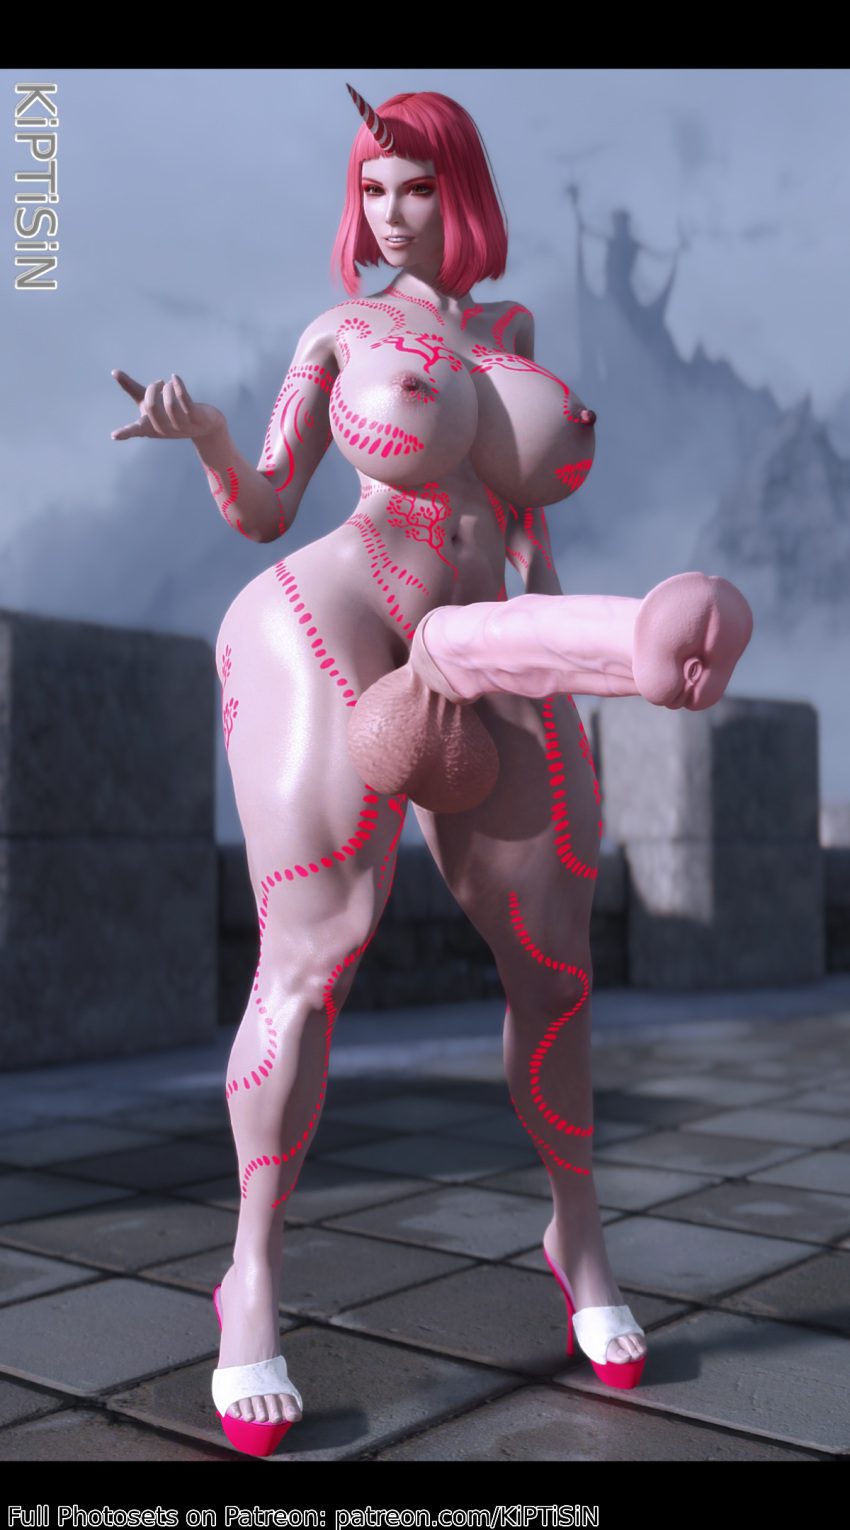 skyrim-rule-porn-–-curvy-hips,-muscular-legs,-pink-hair,-veins,-thick,-the-elder-scrolls